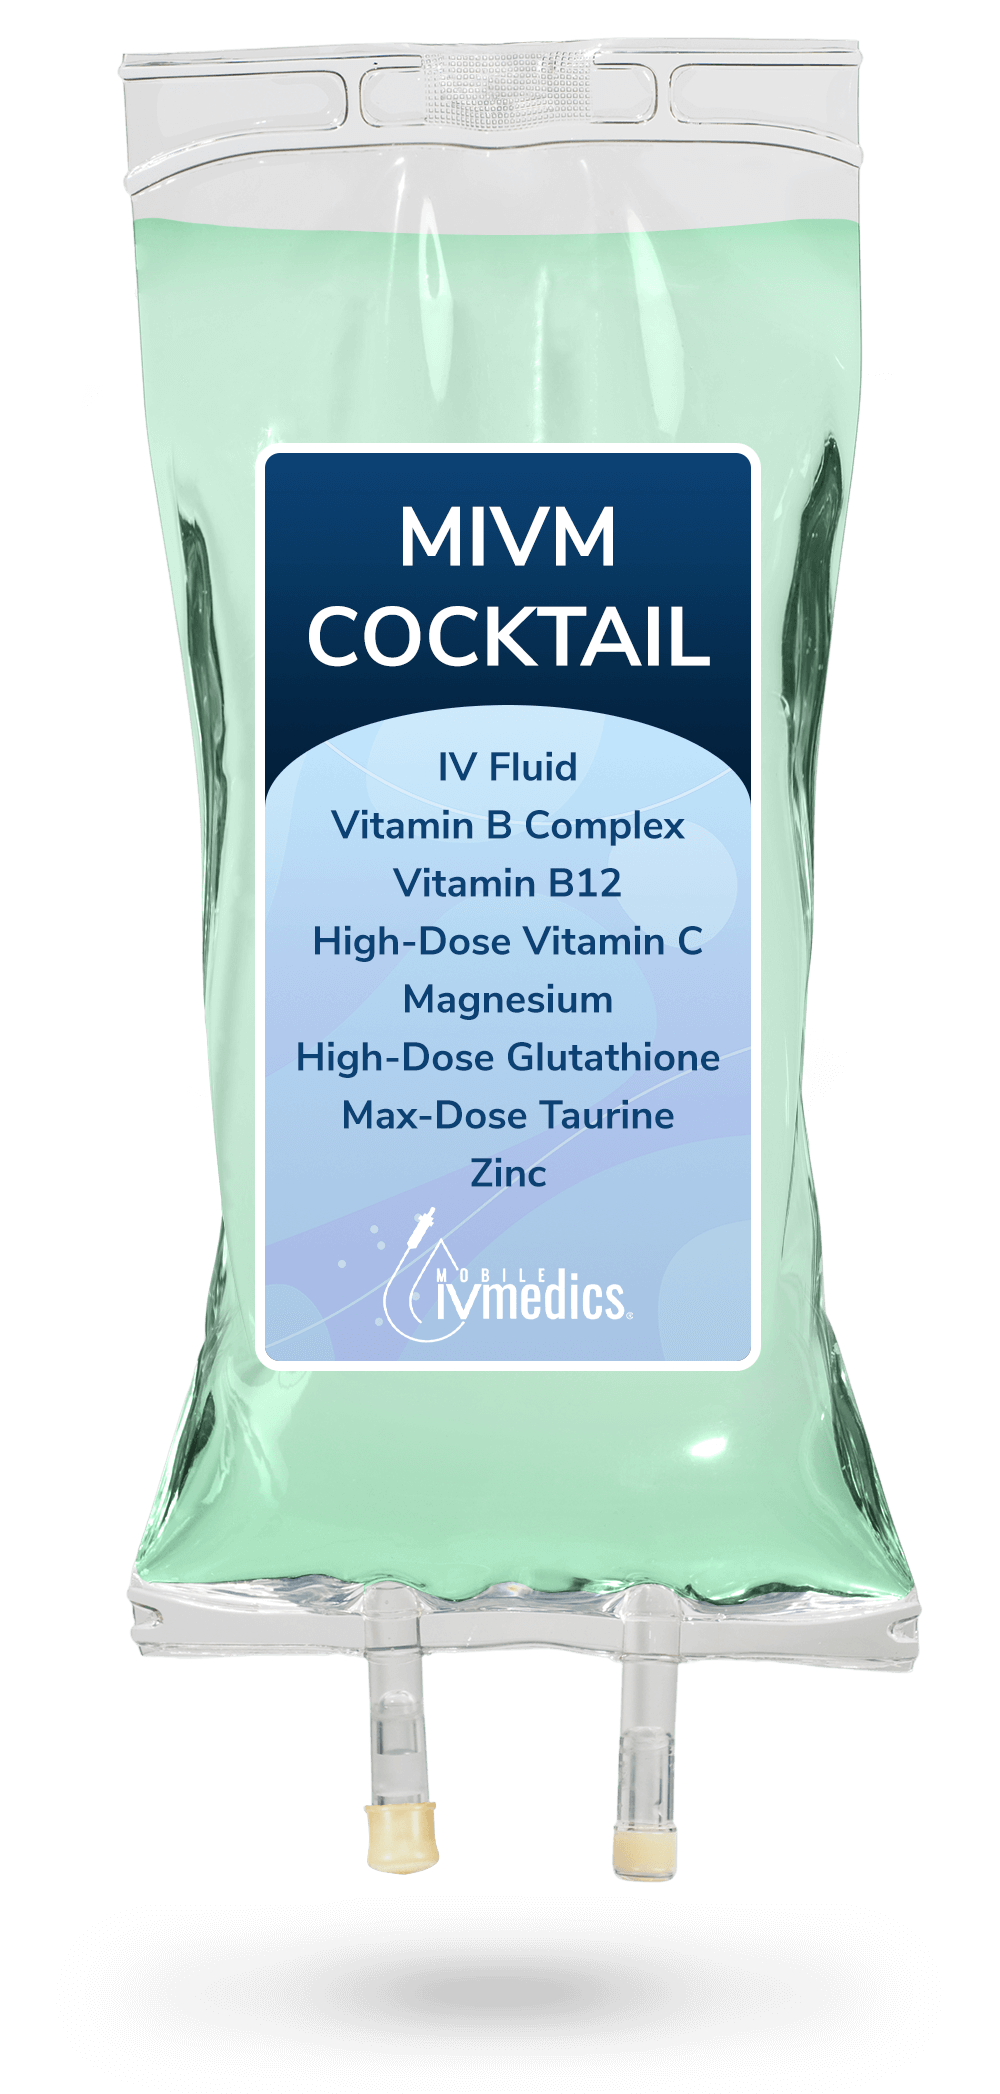 mivm cocktail iv